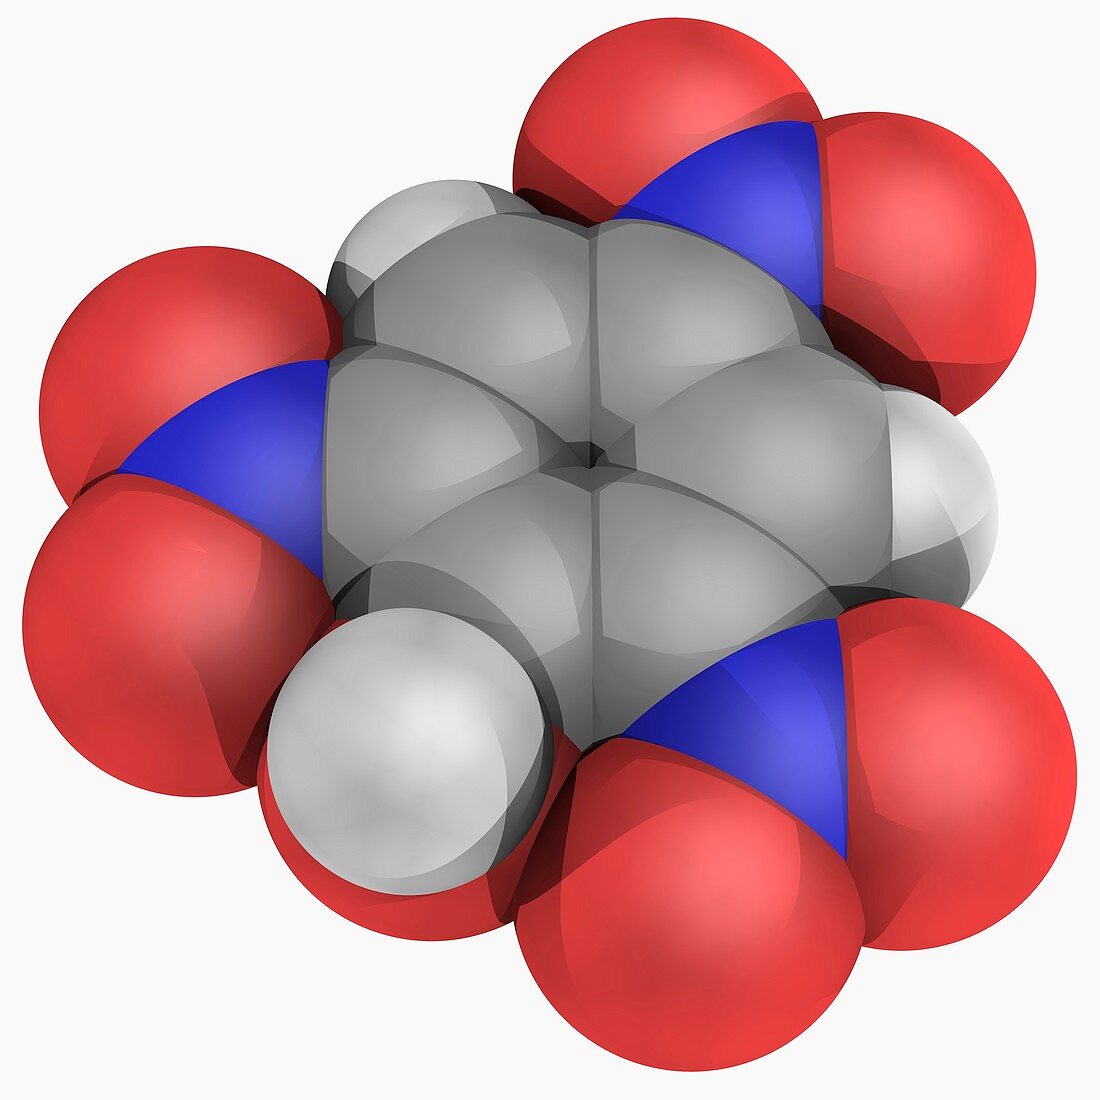 Picric acid molecule